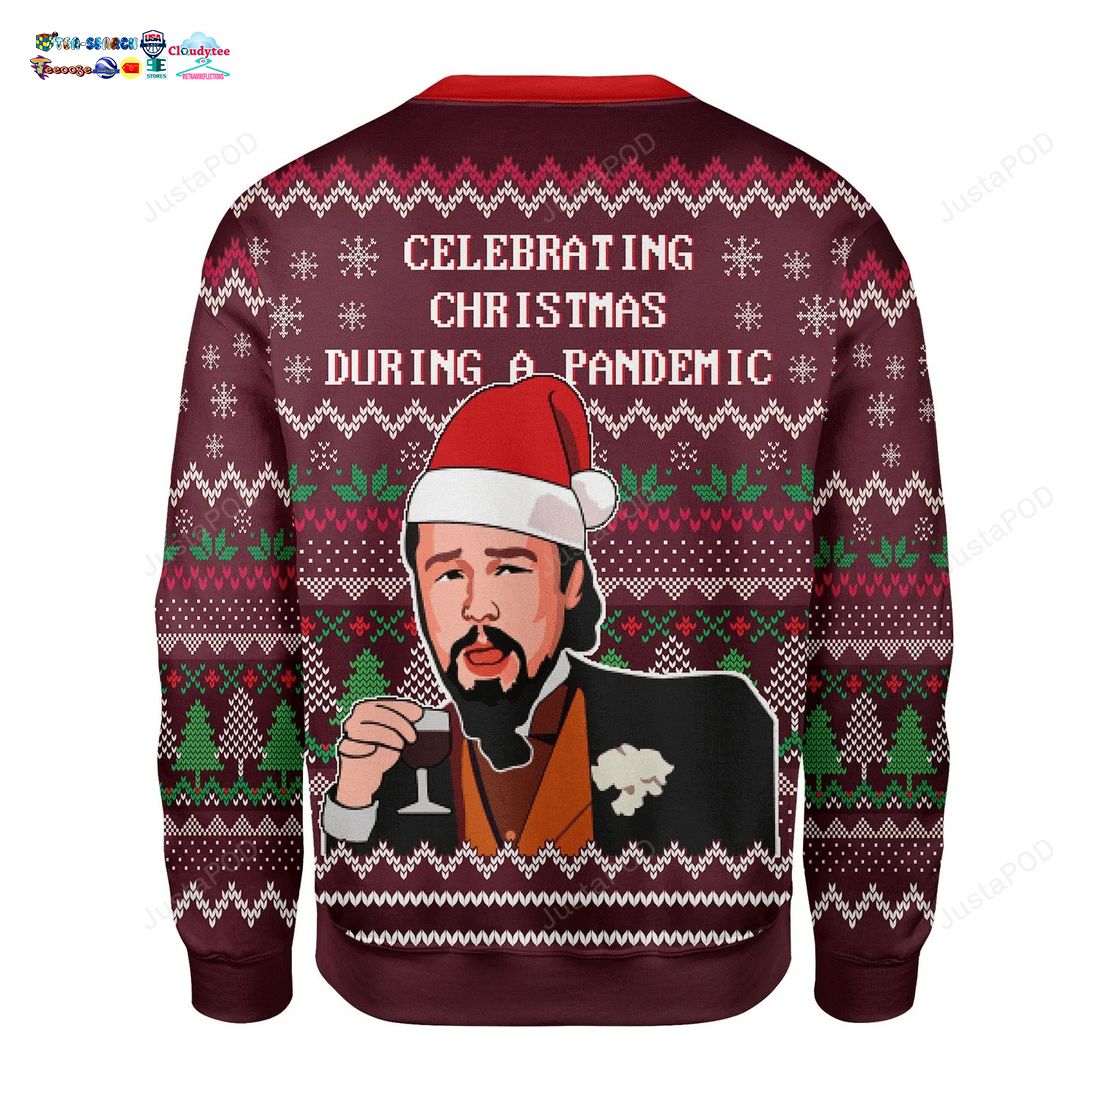 Leonardo DiCaprio Celebrating Christmas During A Pandemic Ugly Christmas Sweater